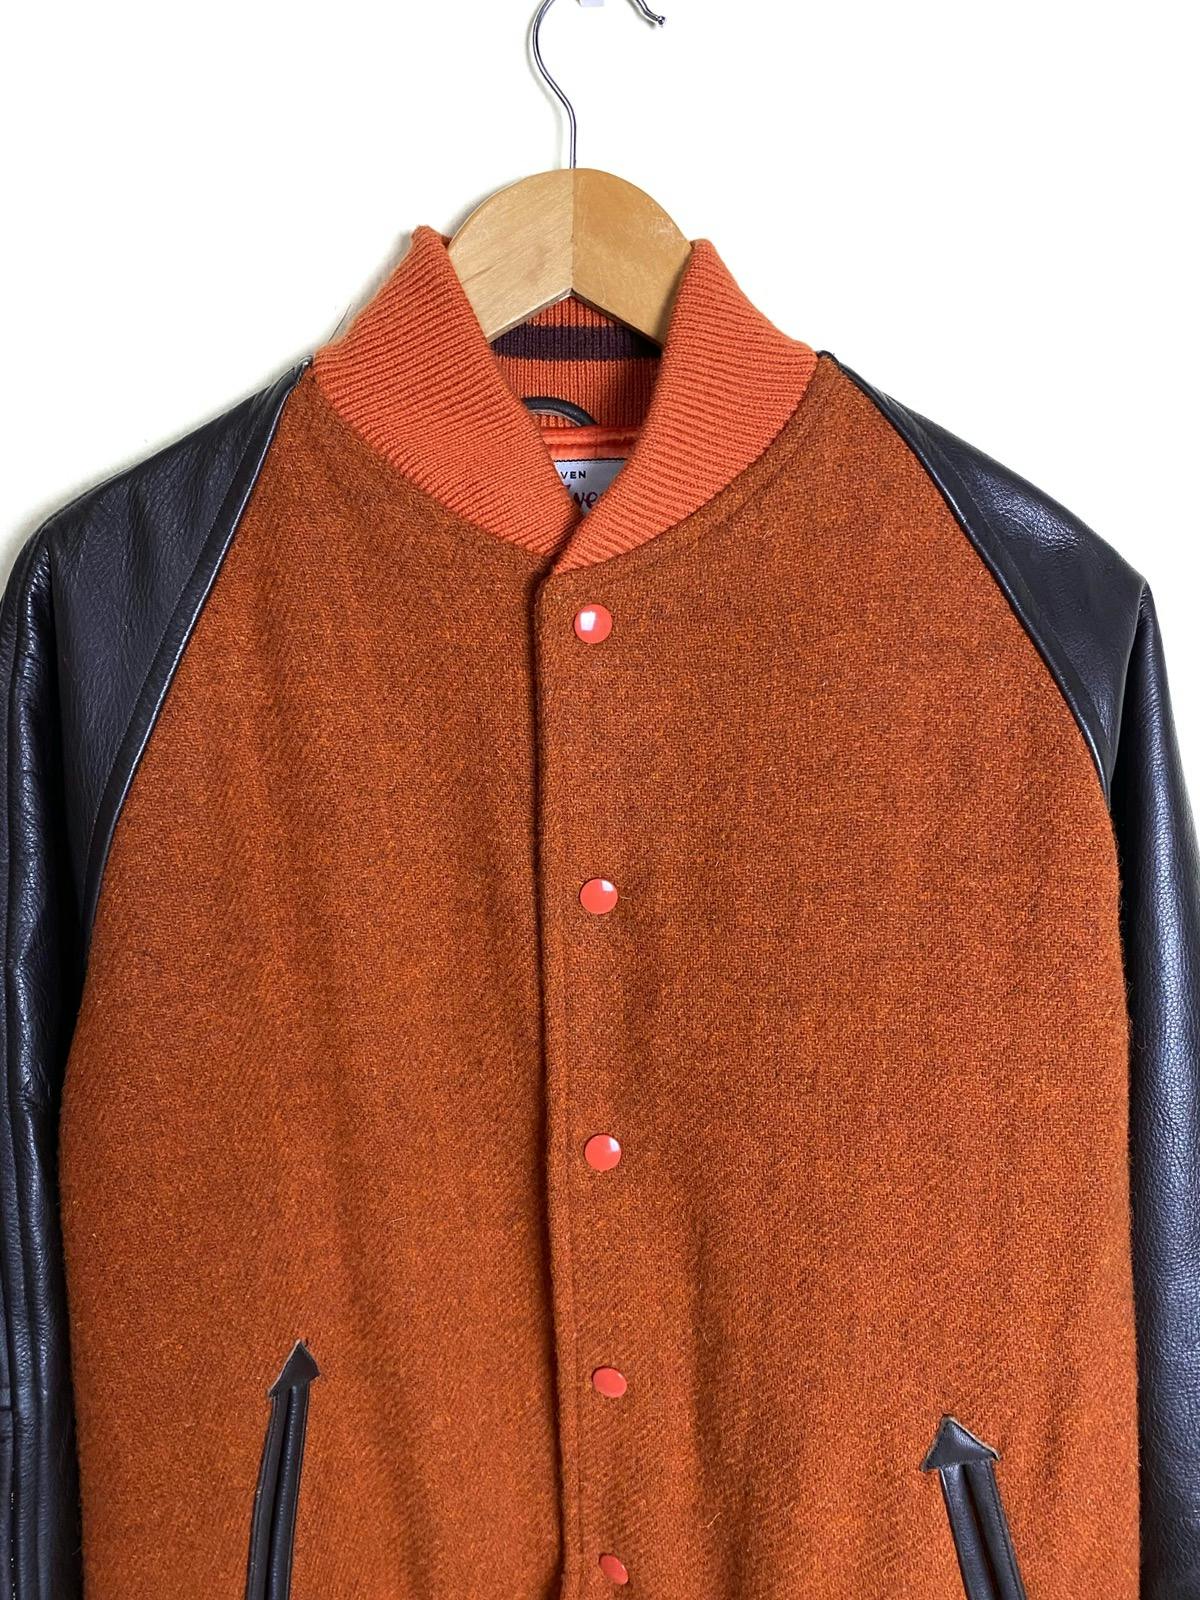 Harris Tweed x Paul Smith Hand Woven Varsity Jacket - 2